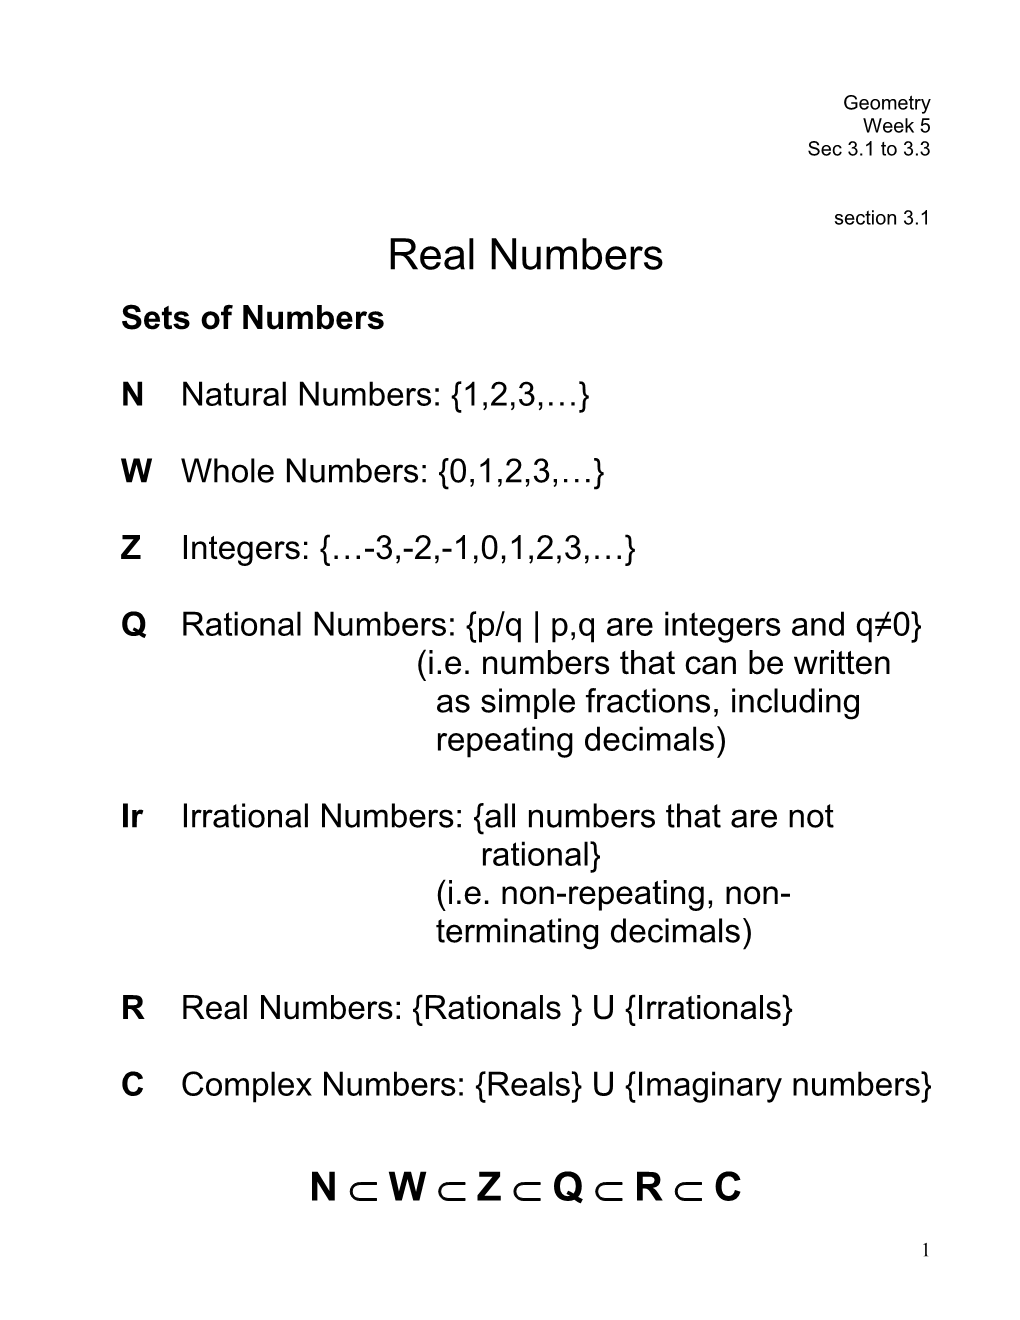 Qrational Numbers: P/Q P,Q Are Integers and Q 0